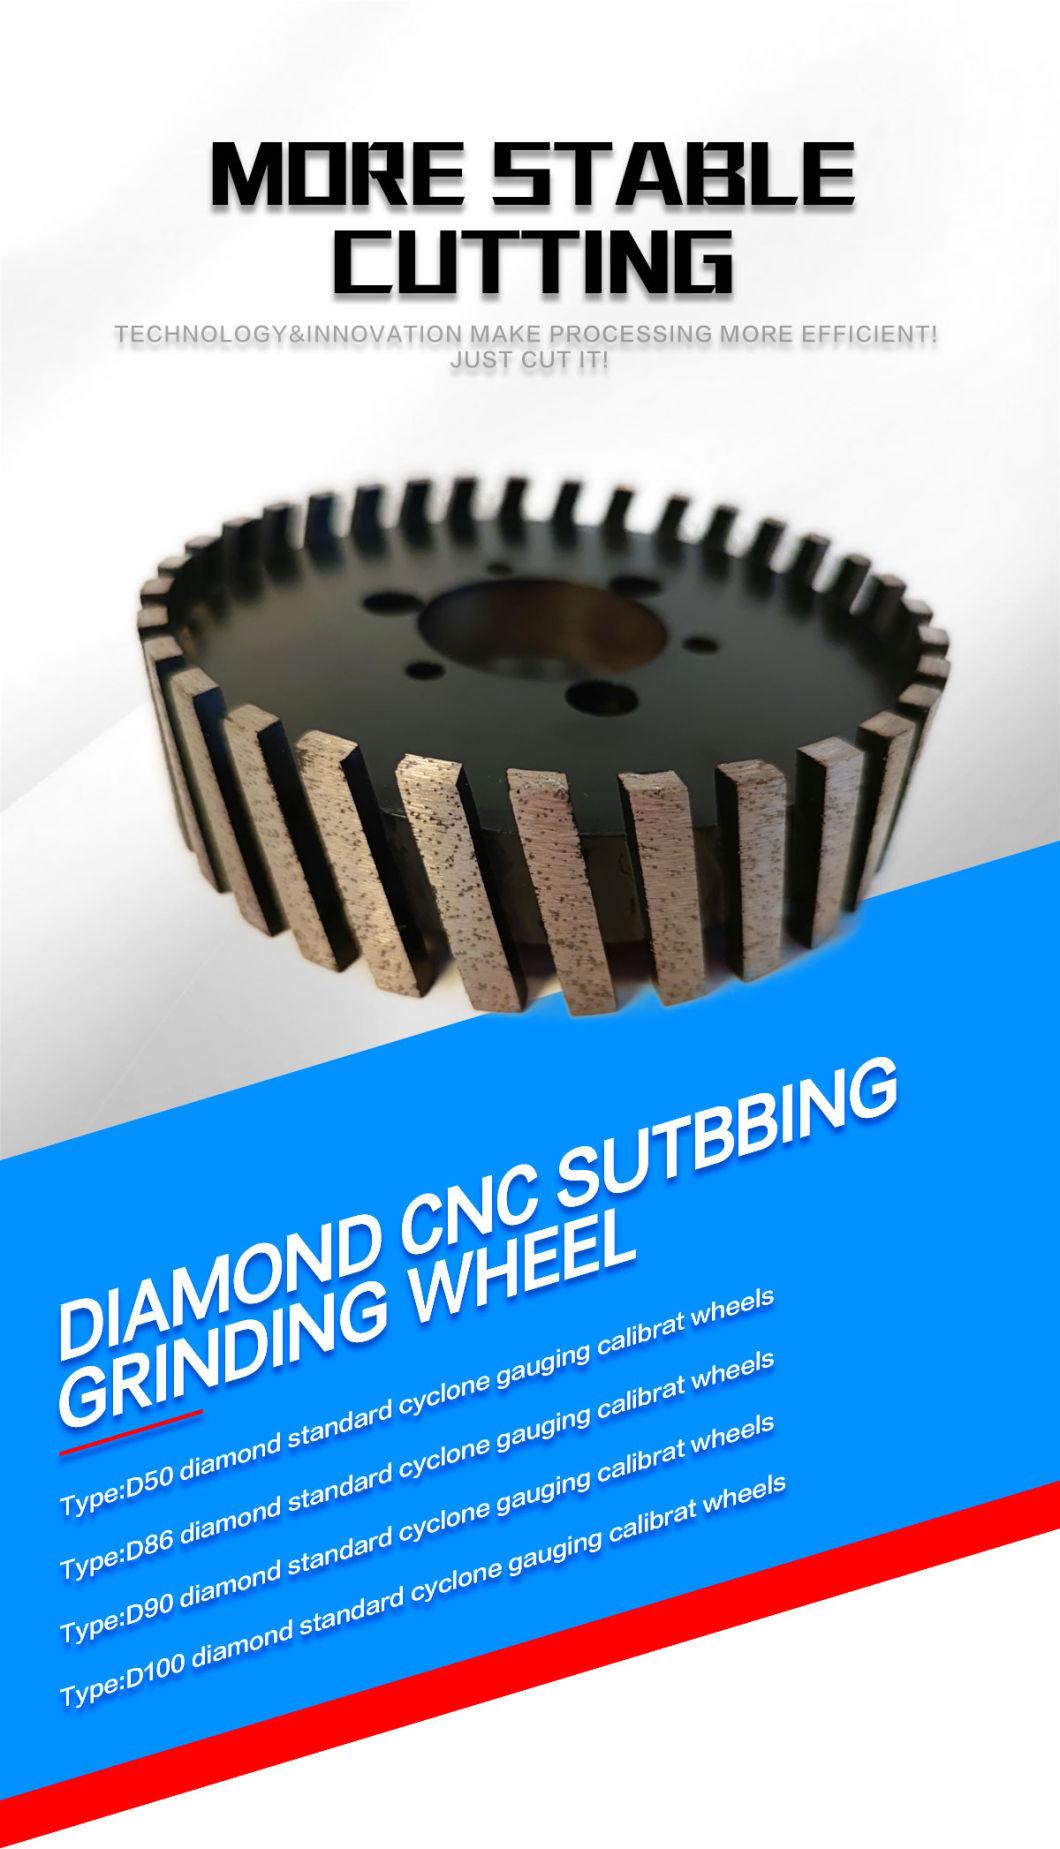 Diamond CNC Stubbing Grinding Wheel for Stone Factory